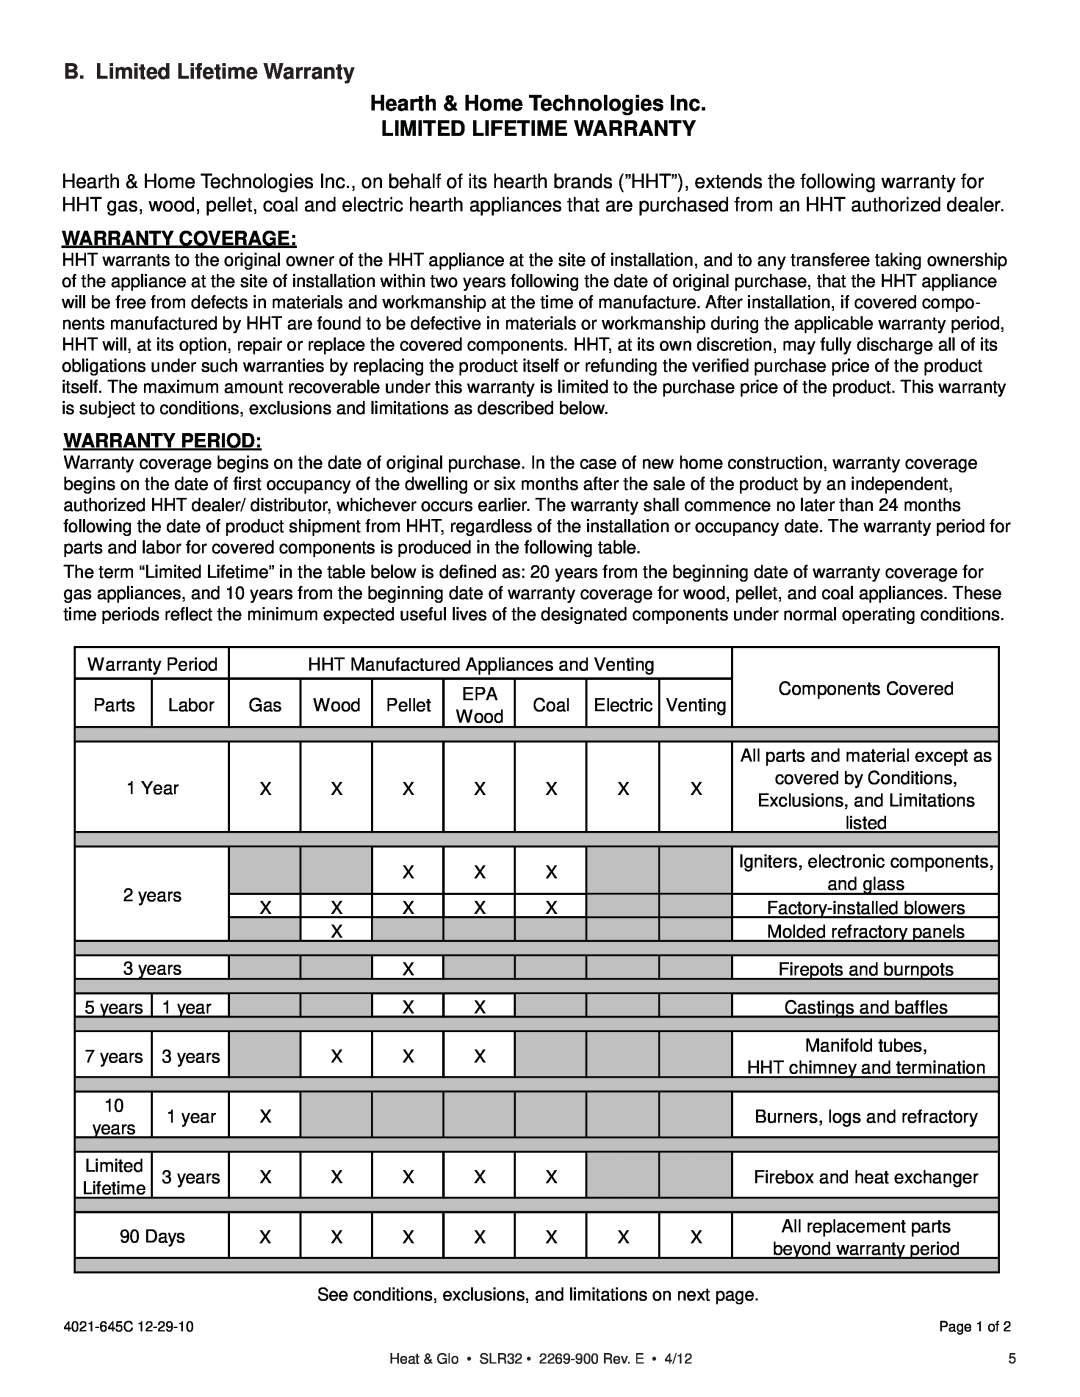 Heat & Glo LifeStyle SLR32 owner manual B. Limited Lifetime Warranty, Hearth & Home Technologies Inc, Warranty Coverage 